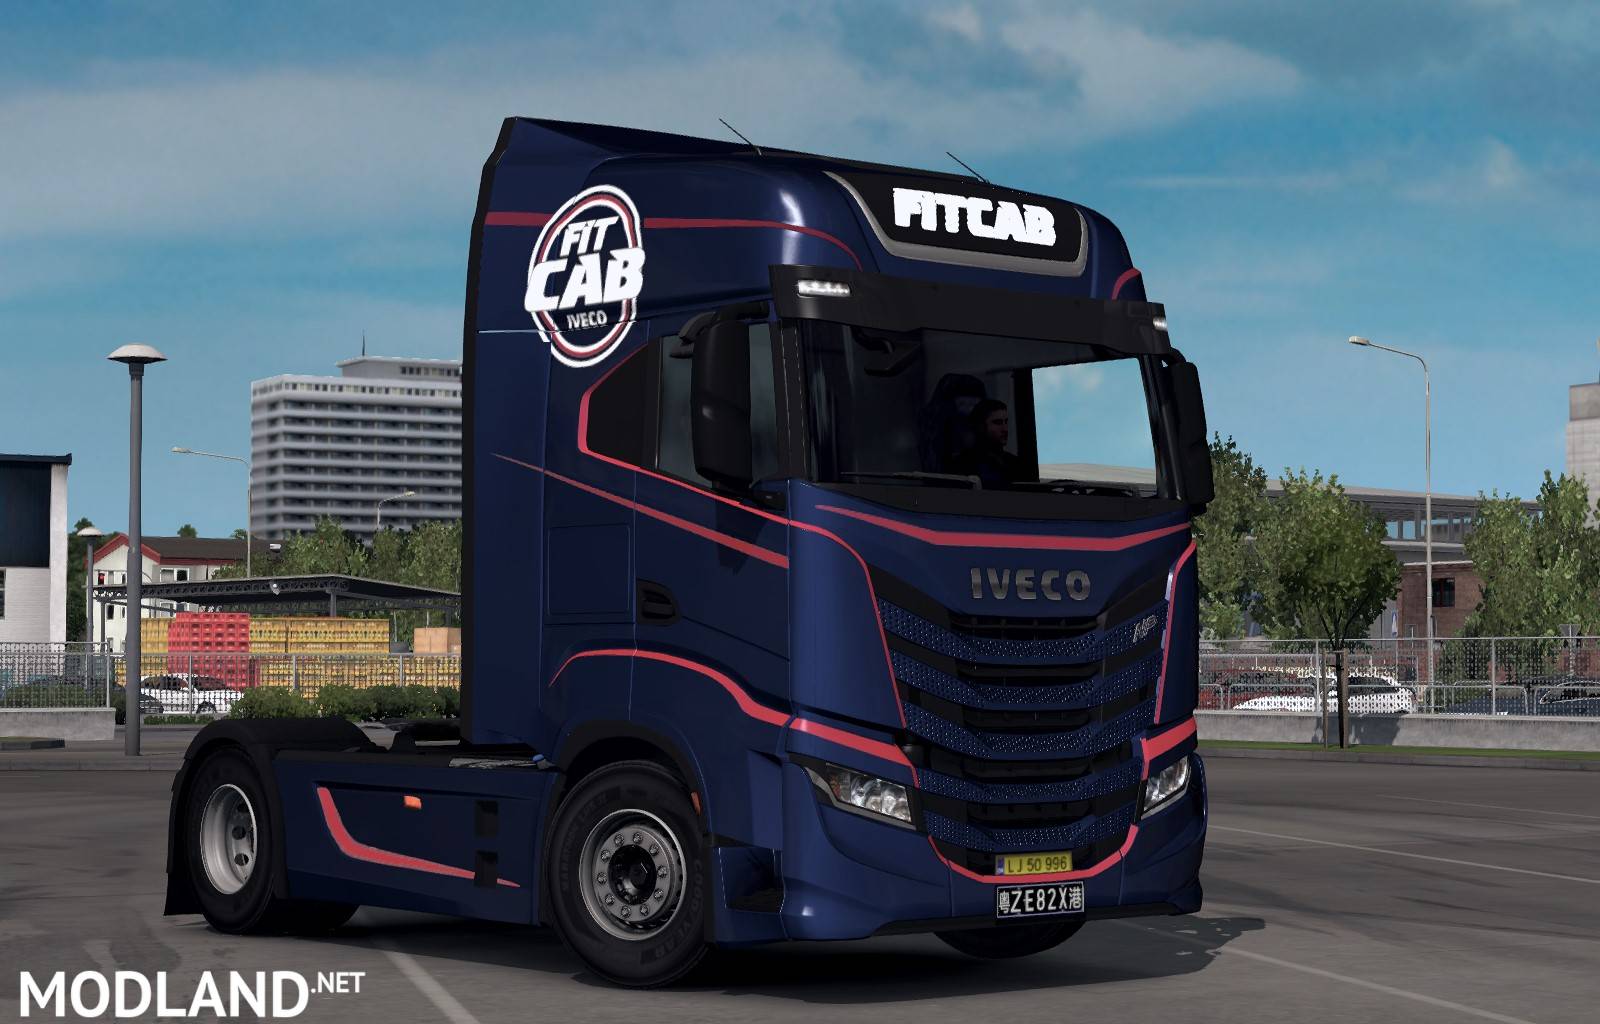 Моды для euro truck simulator. Грузовики етс 2 Ивеко. Евро трак симулятор 2020. Тягач Iveco етс 2. Iveco s-way ETS 2.